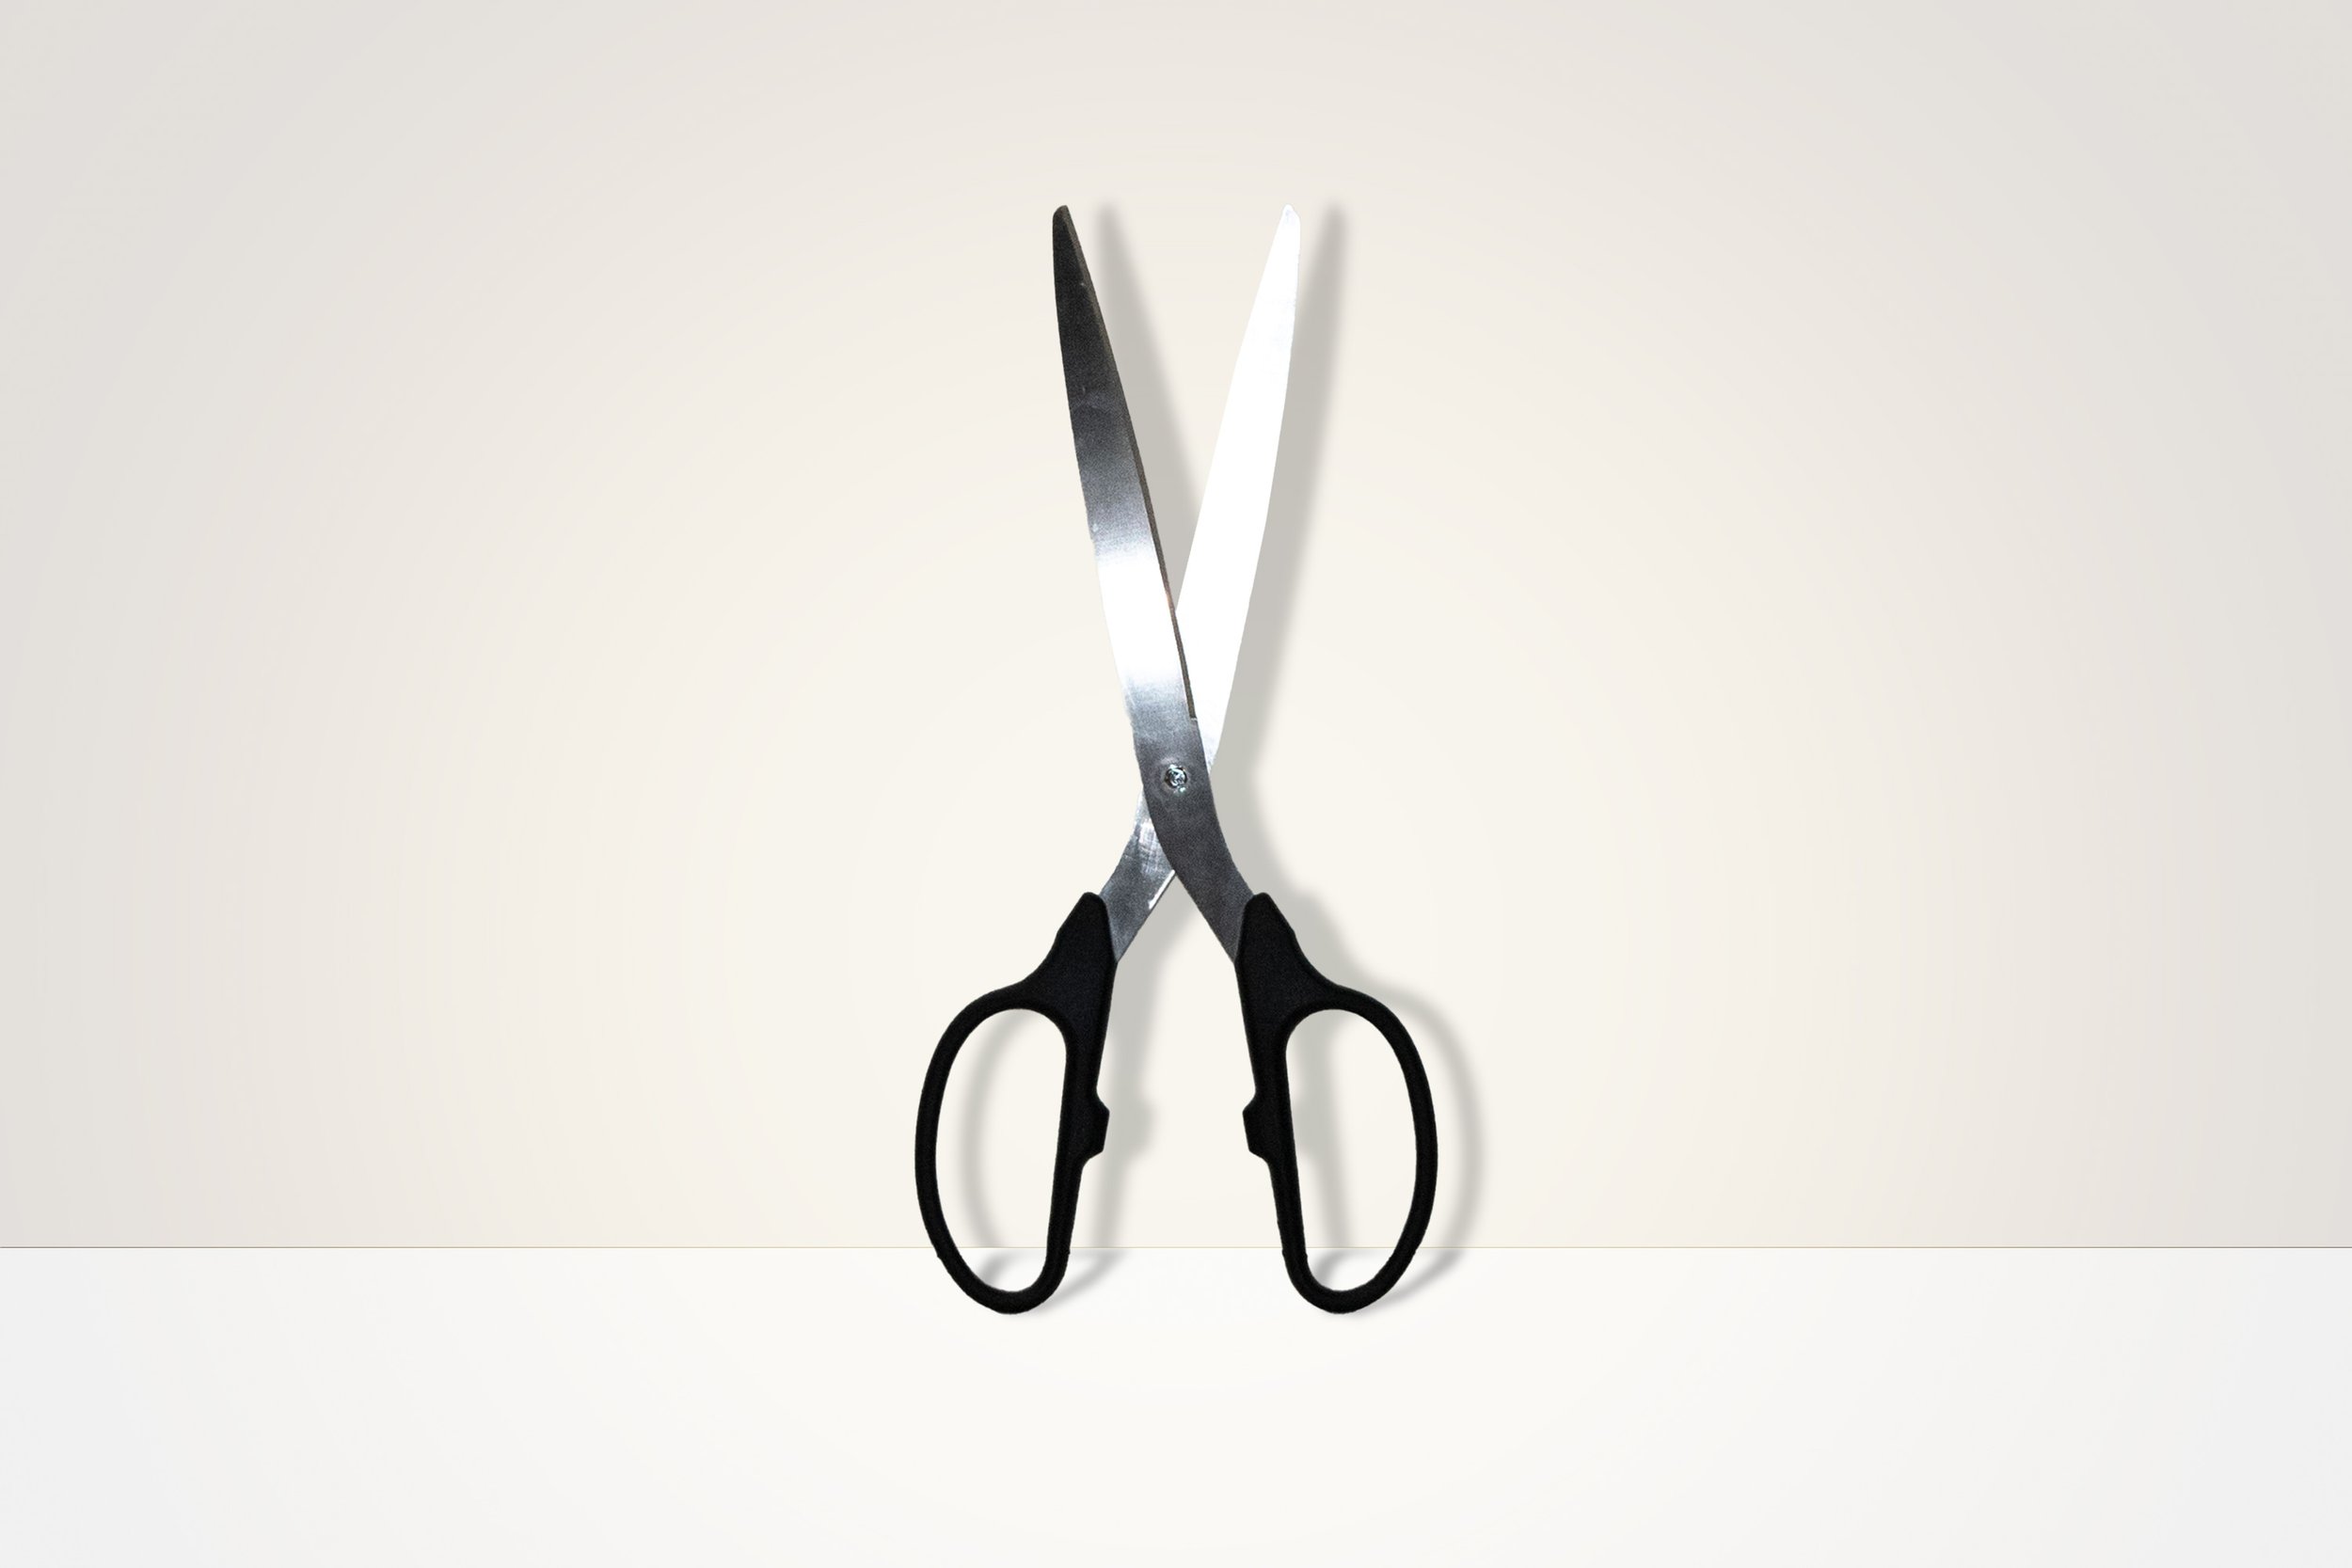 The Ribbon Cutting Scissors